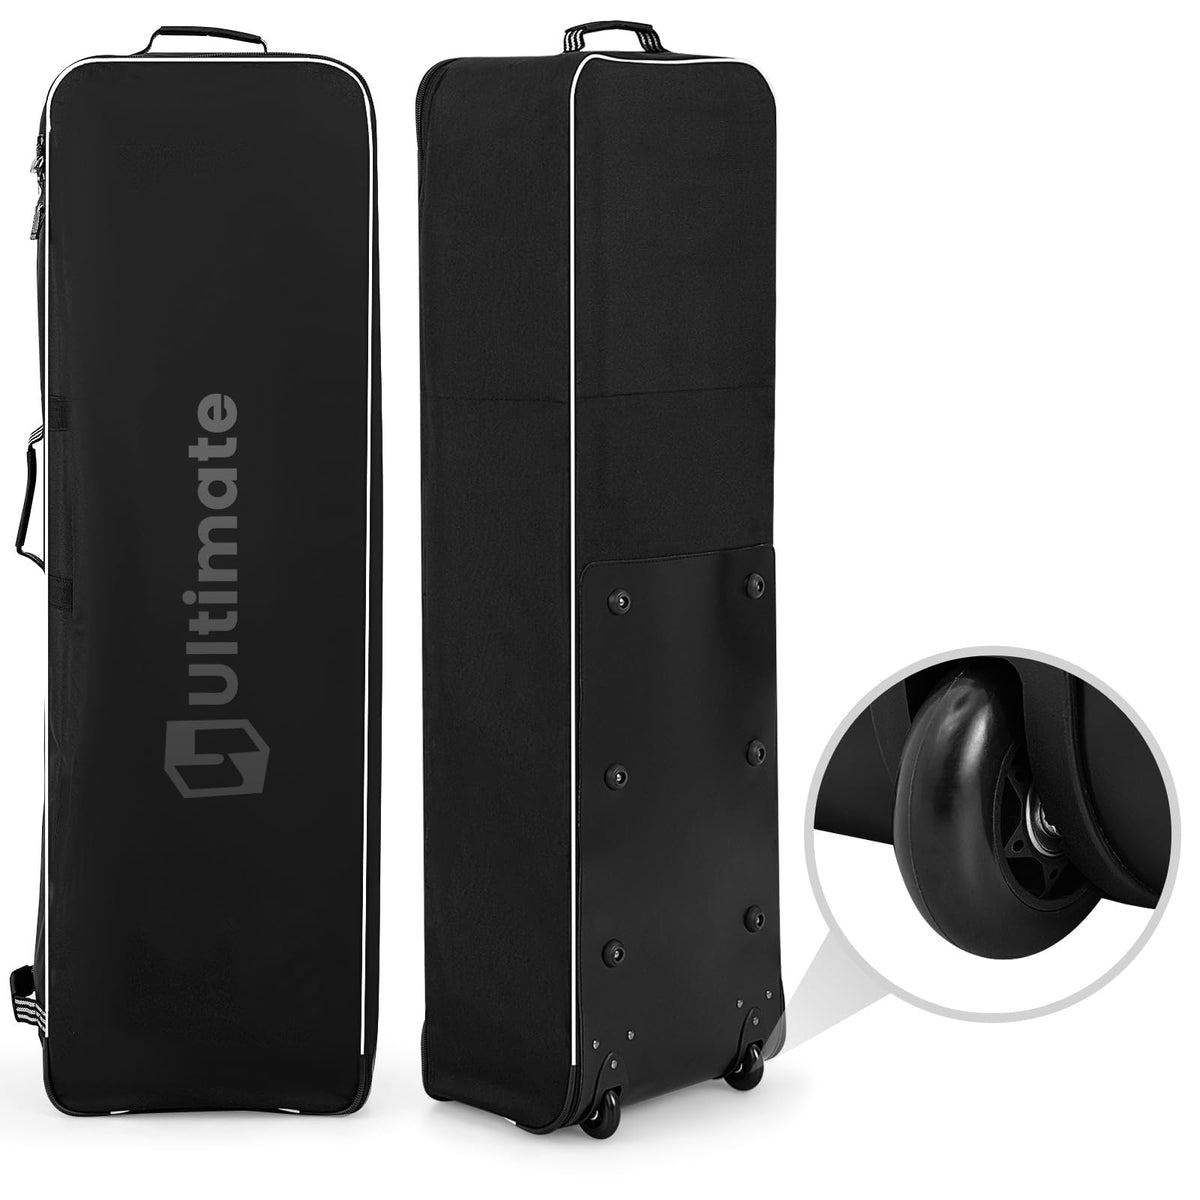 Goplus Golf Travel Bag with Wheels, Portable Golf Club Travel Bag with 3 Pull Handles